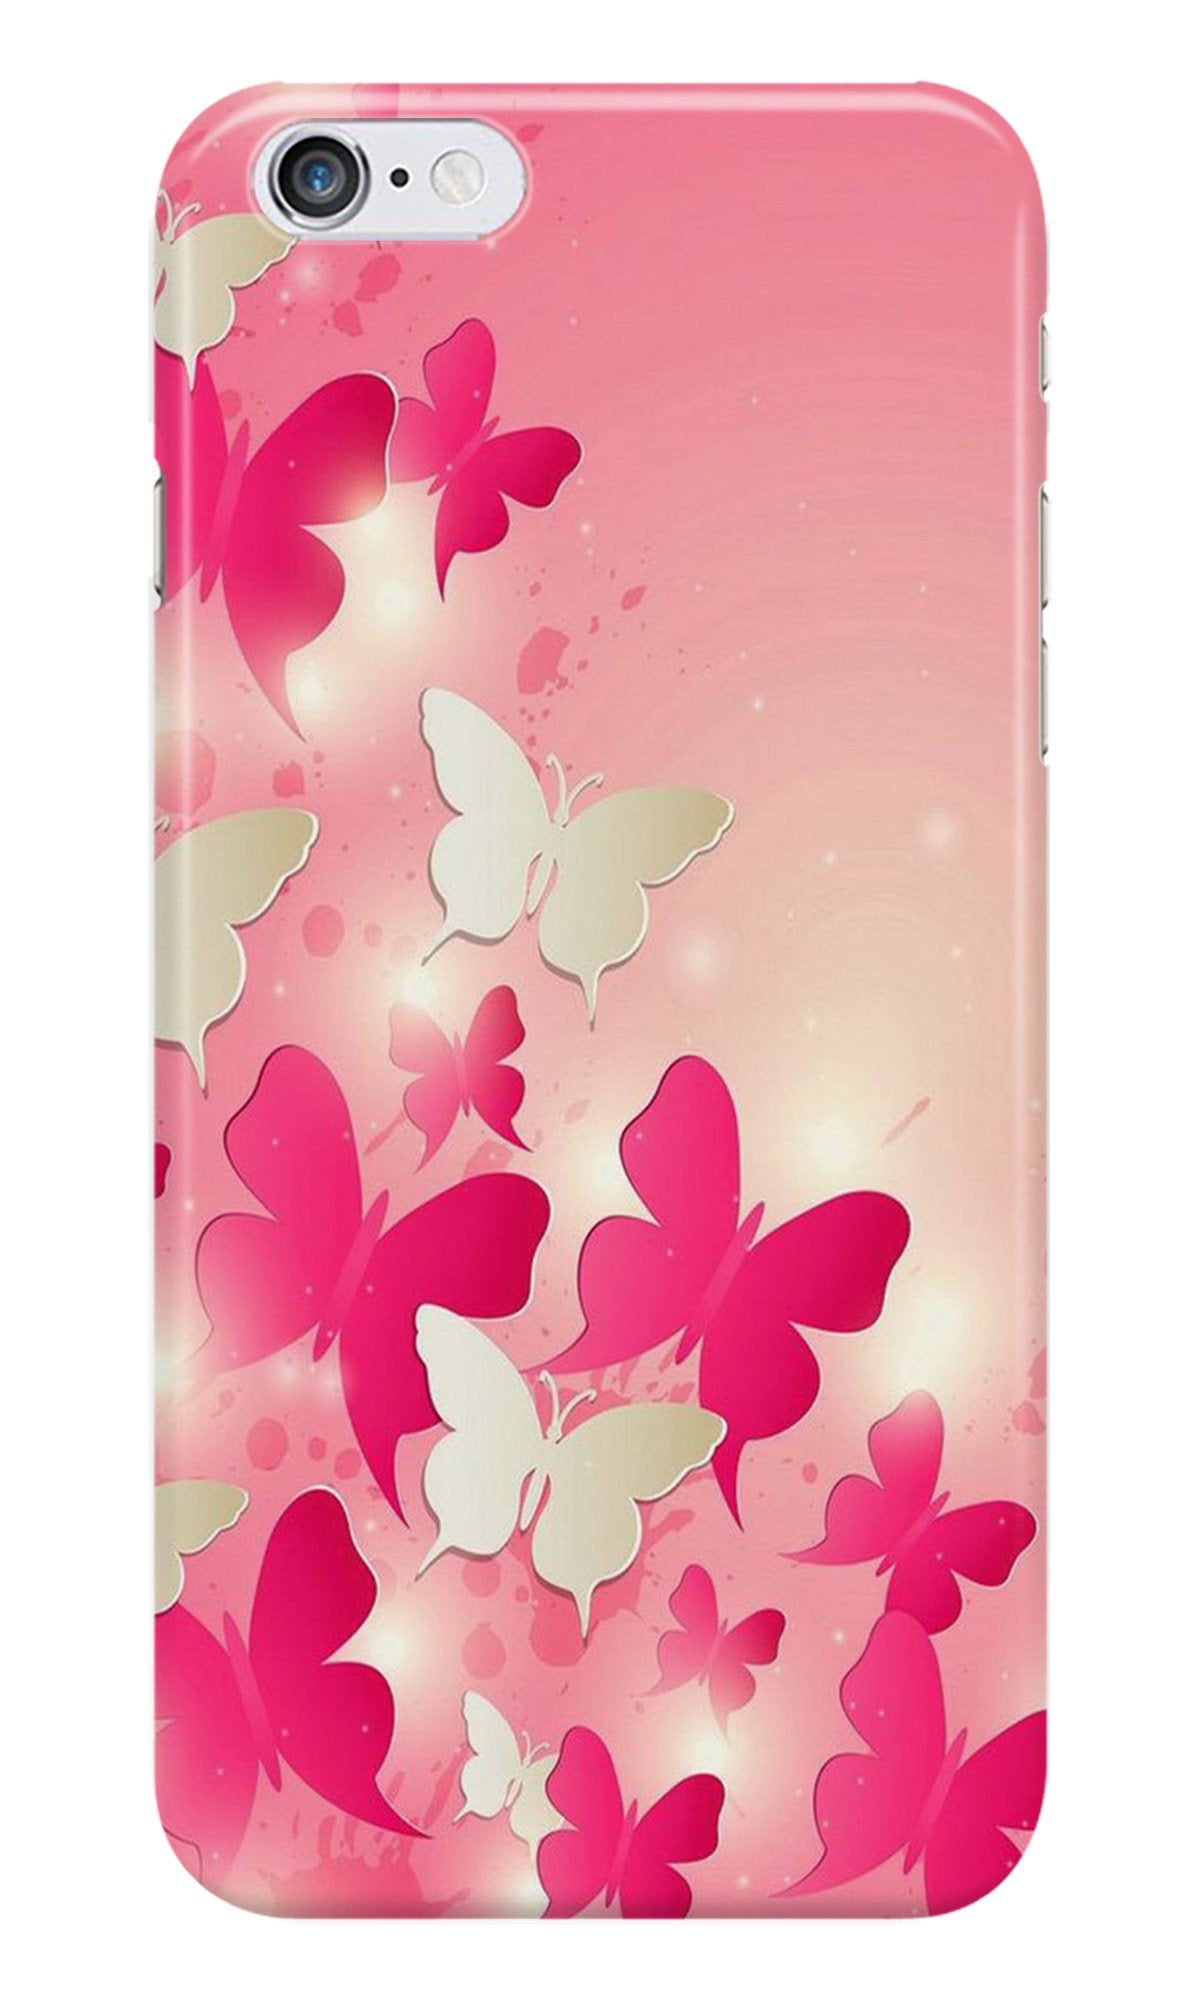 White Pick Butterflies Case for iPhone 6 Plus/ 6s Plus